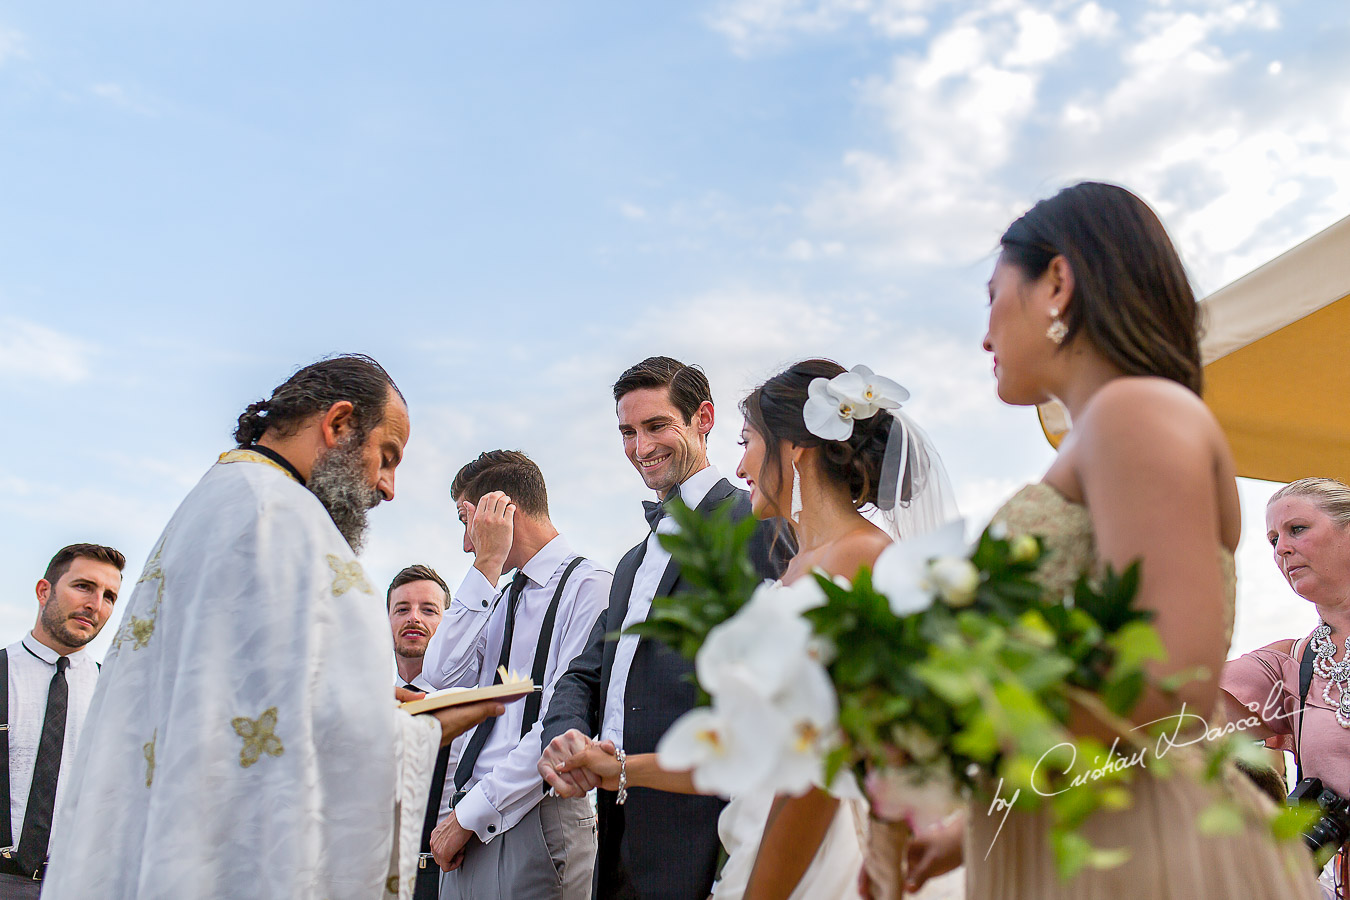 Wedding moments captured at a wedding in Ayia Napa, Cyprus by Cristian Dascalu.